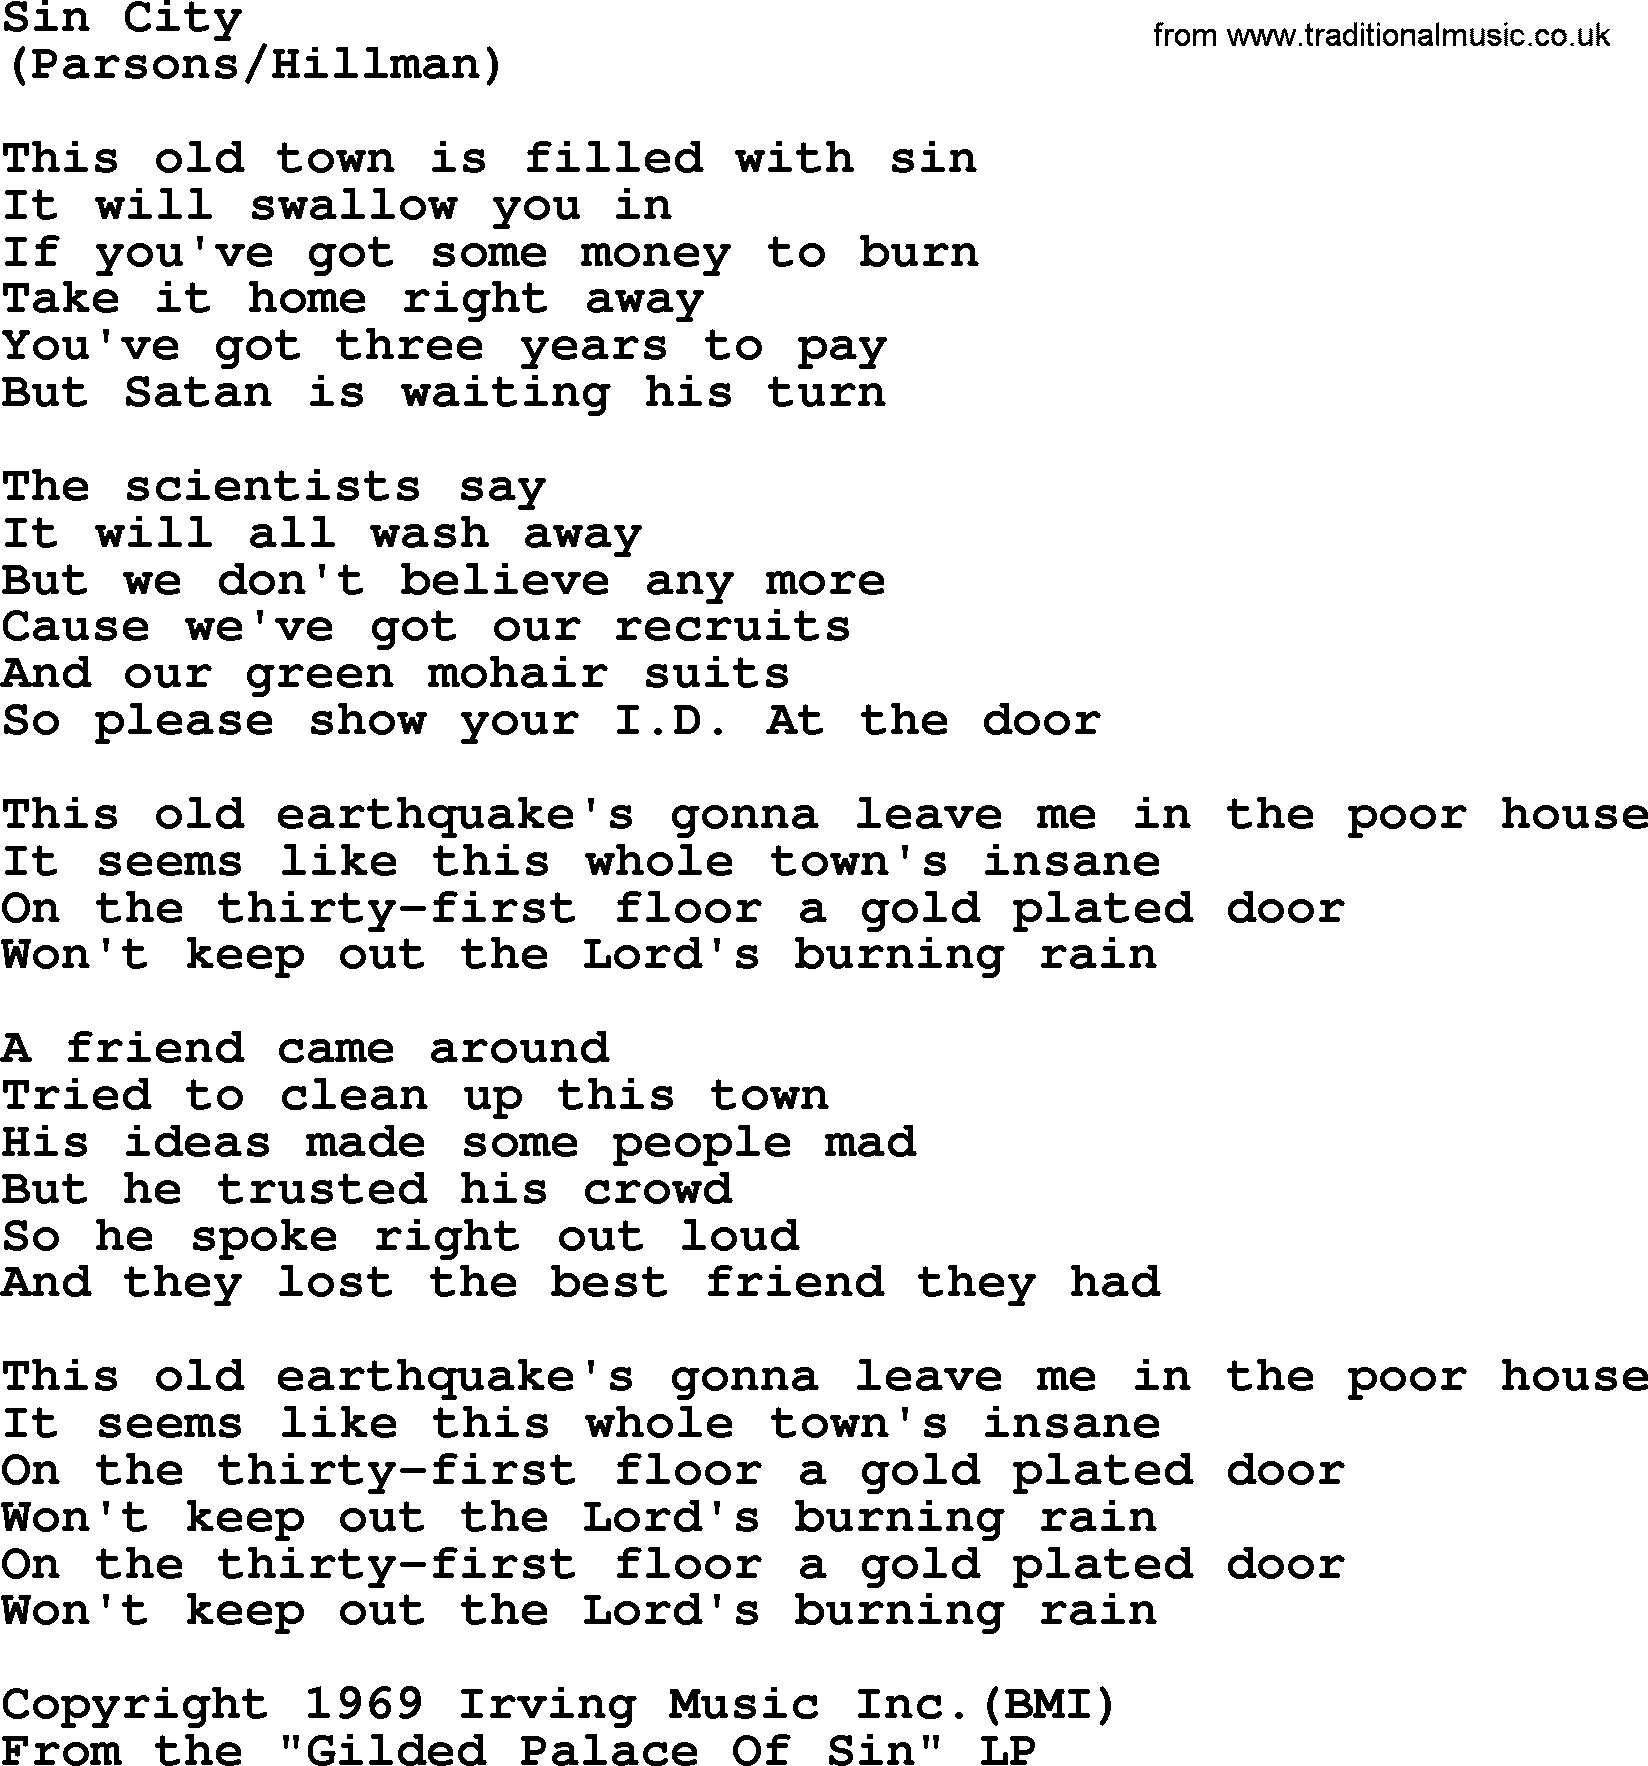 The Byrds song Sin City, lyrics